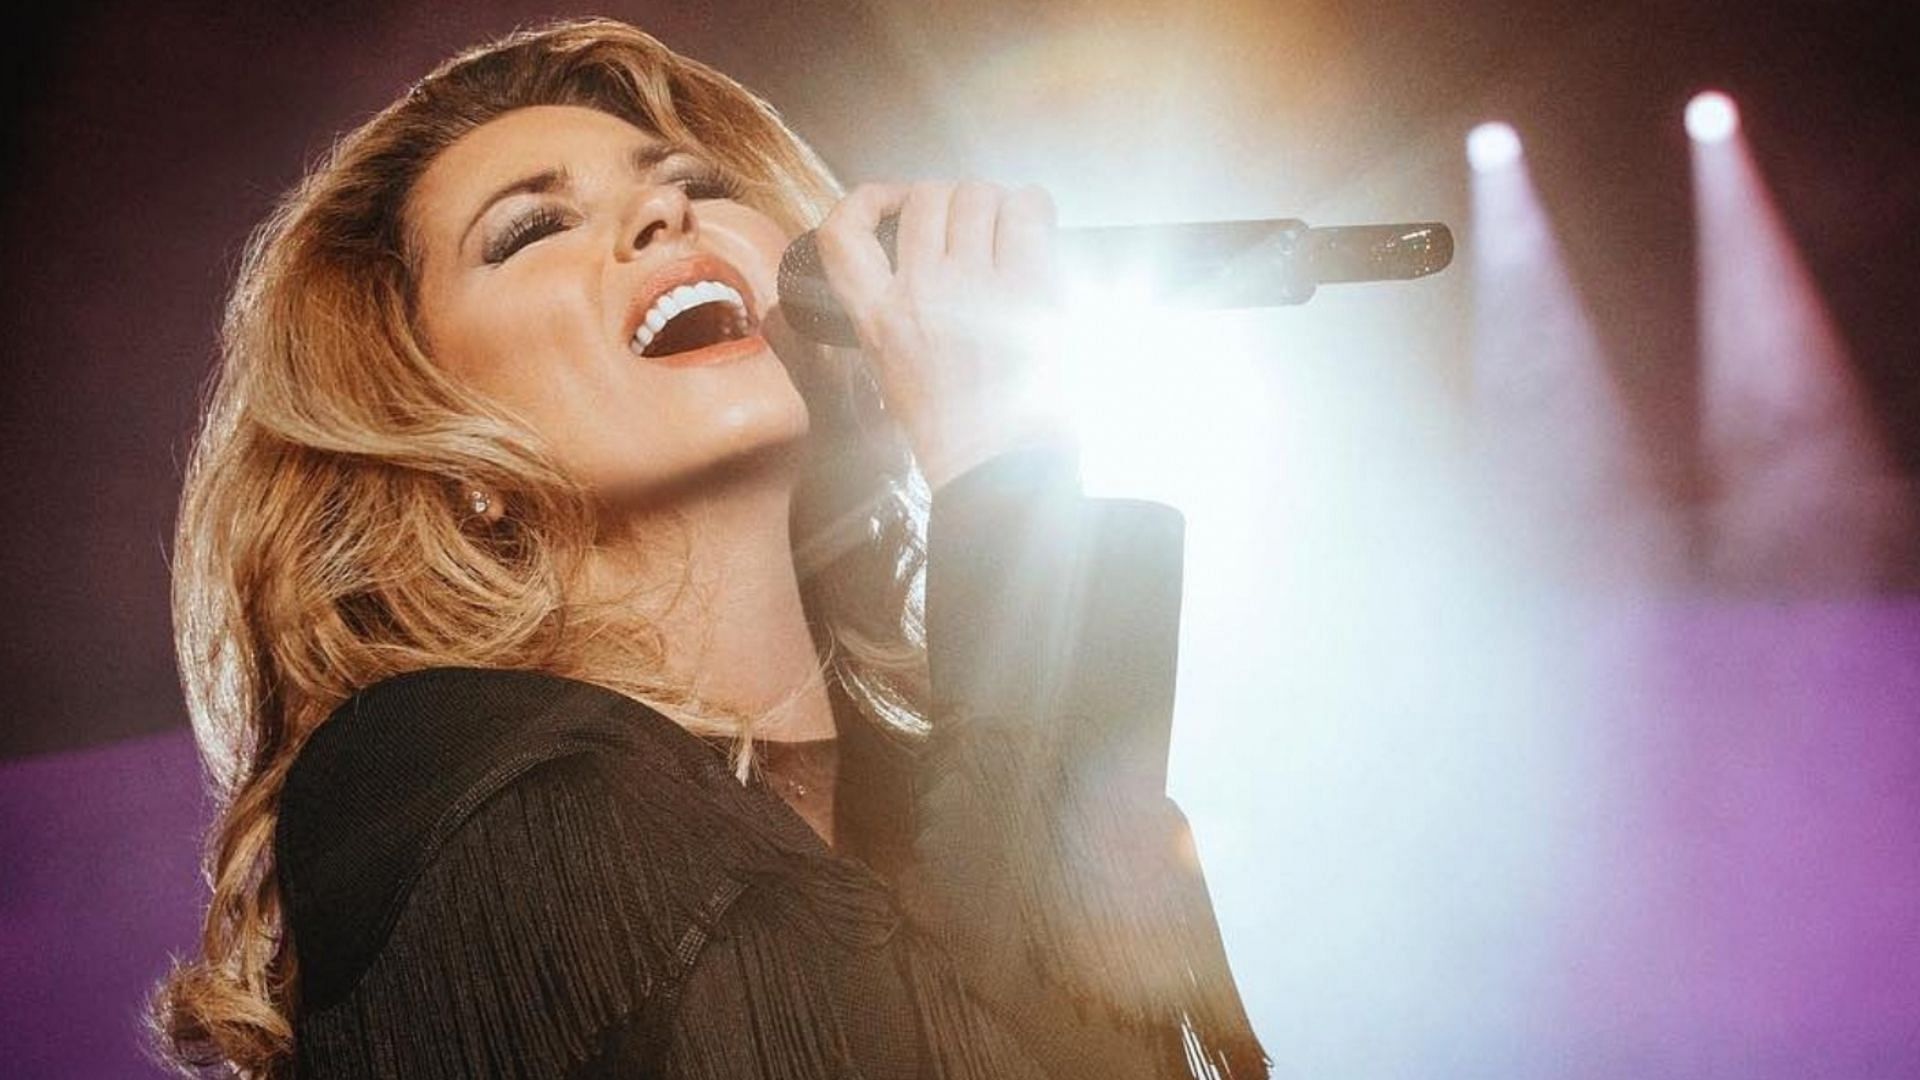 Shania Twain has announced a Nashville Concert scheduled for 2023. (Image via Instagram / @shaniatwain)